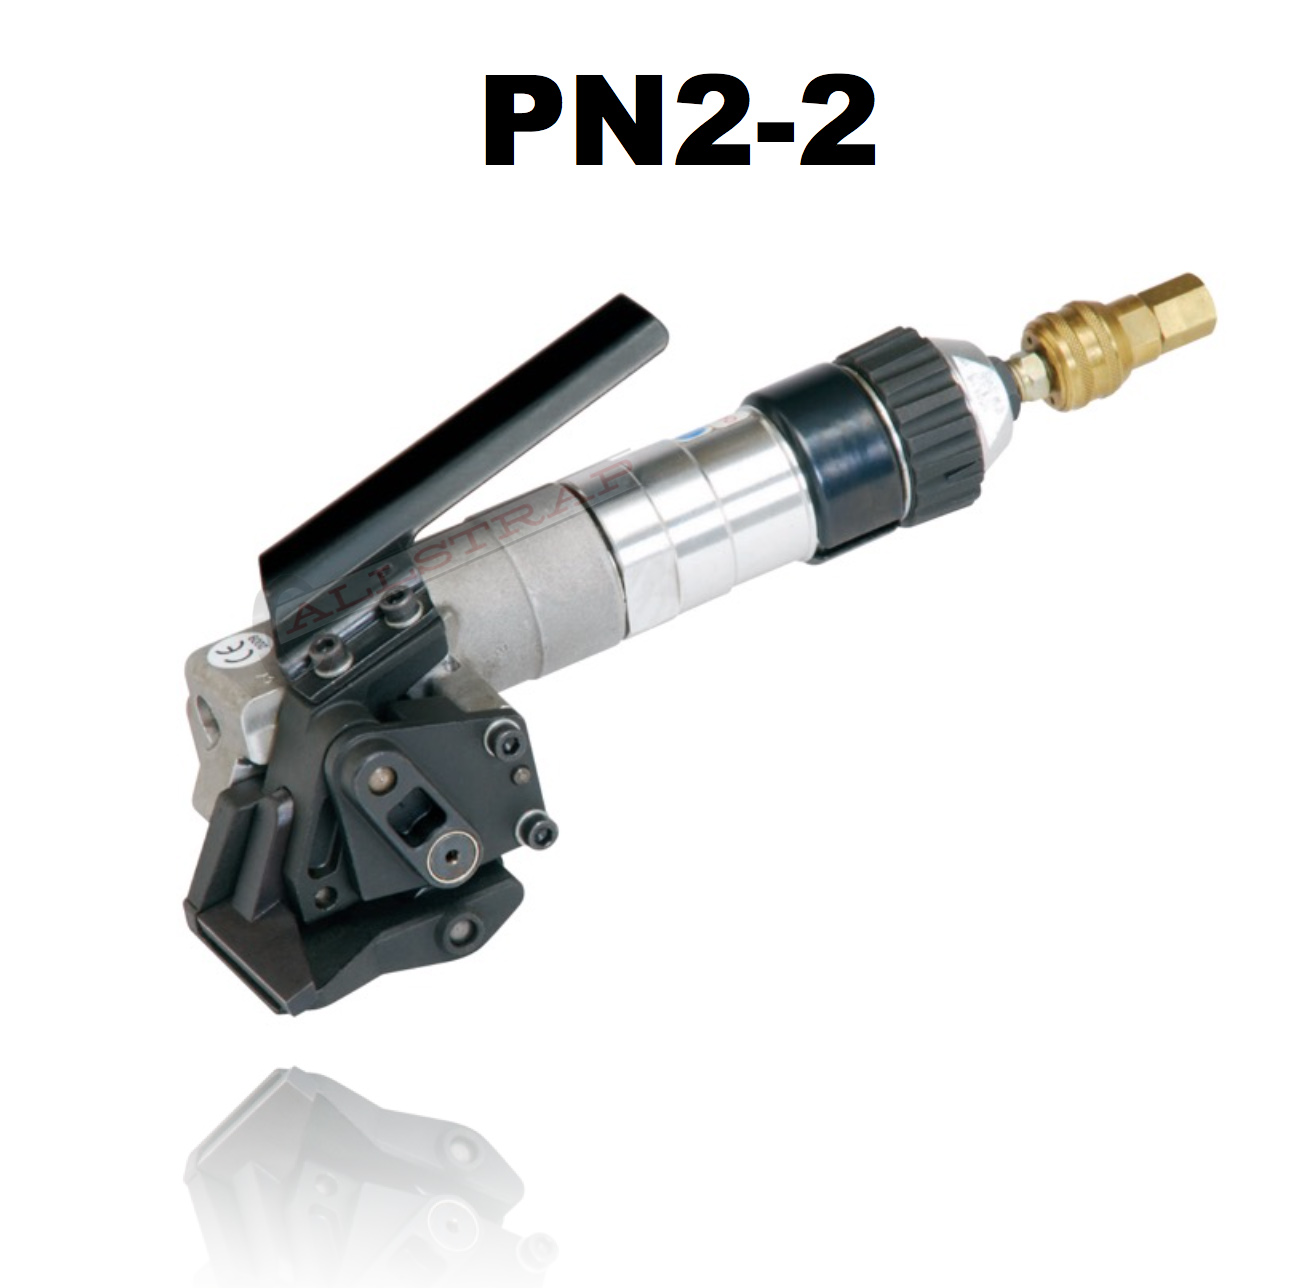 pn2-2 tool allstrap